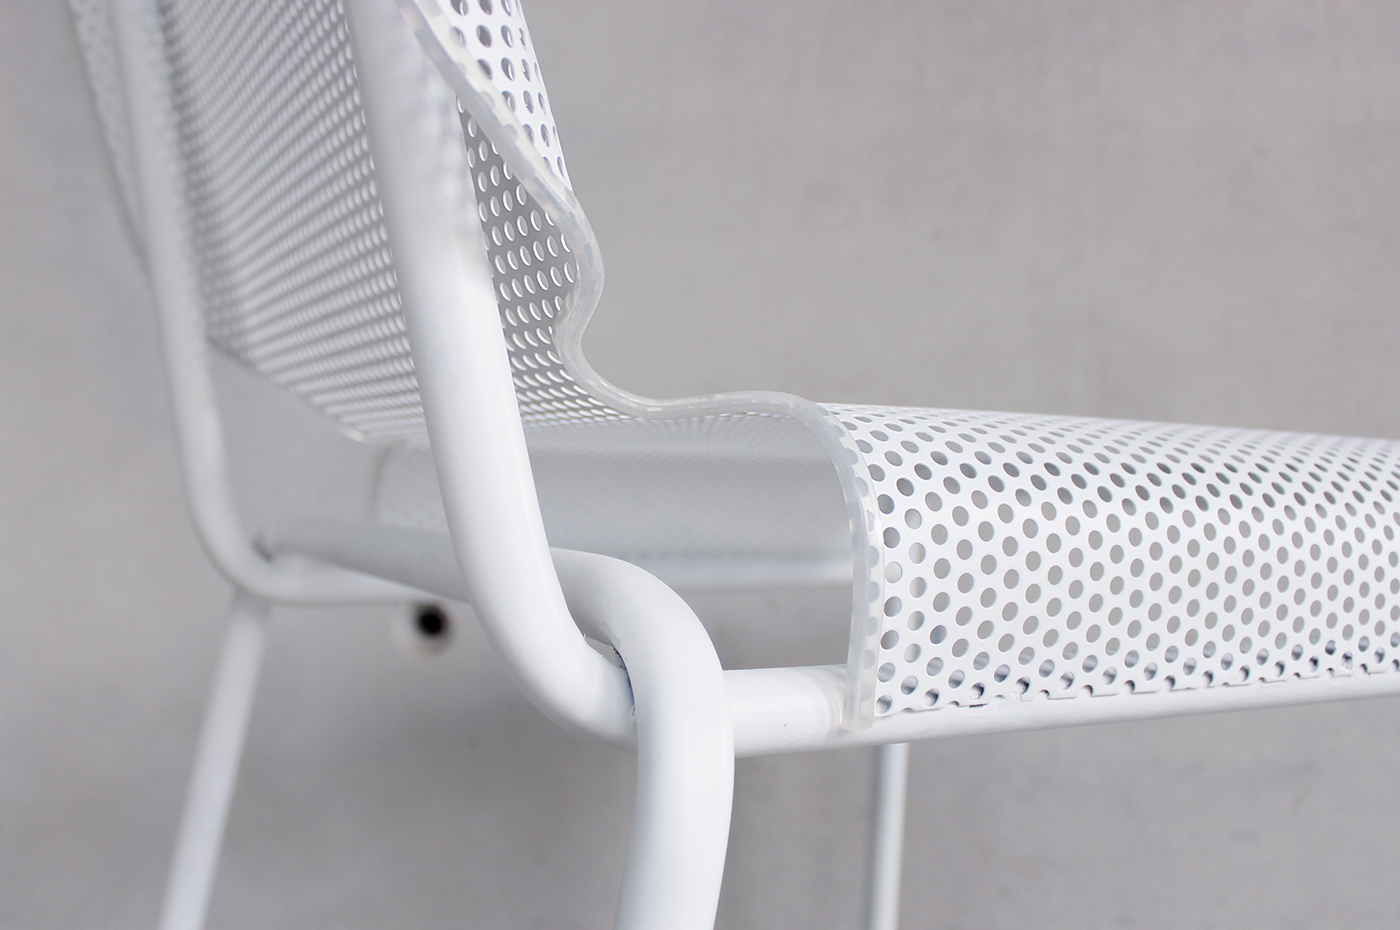 metal Feminin chair perforated Calligaris model rapid prototype soft Phoenix